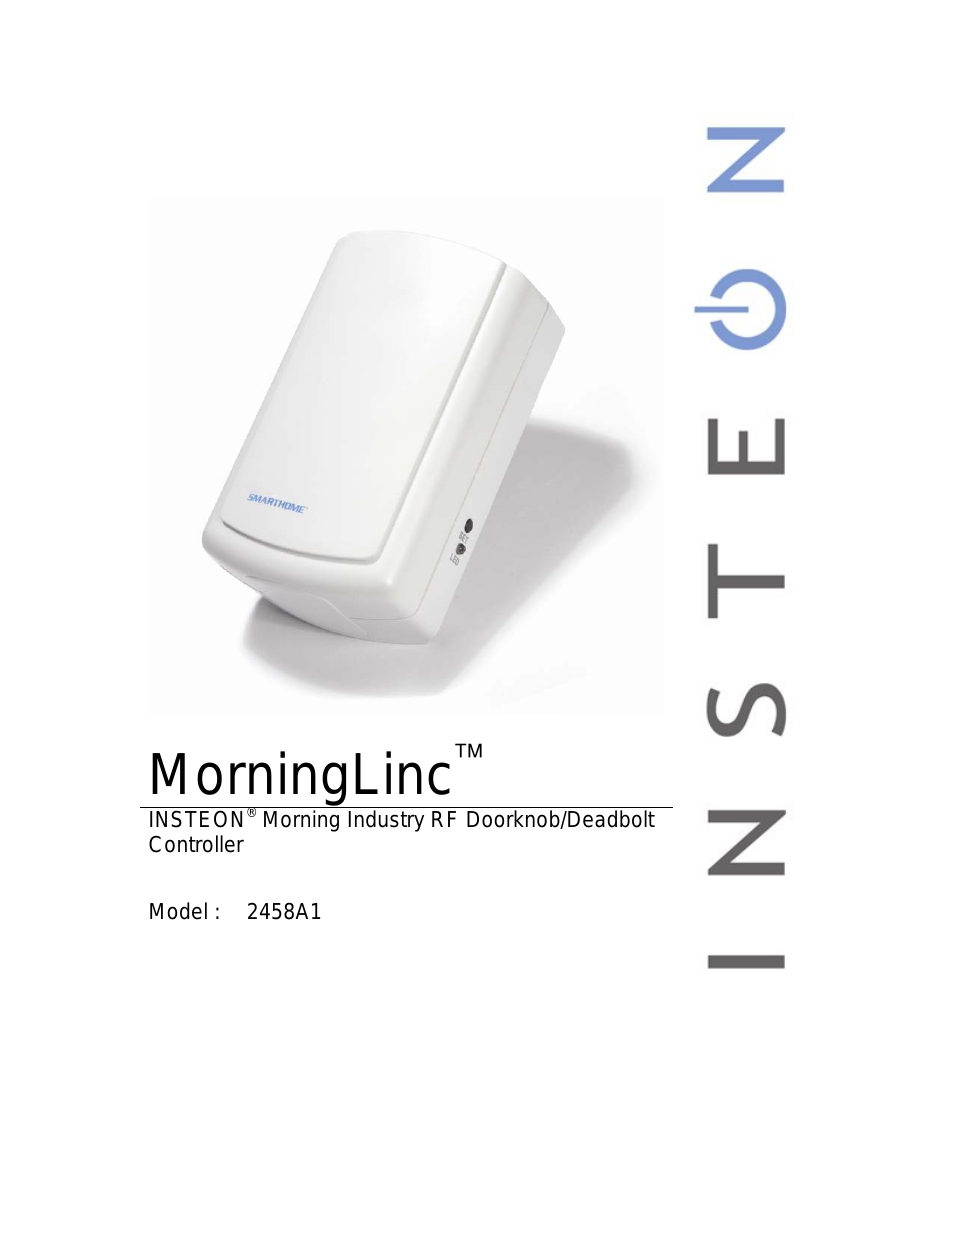 MorningLinc (2458A1) Manual